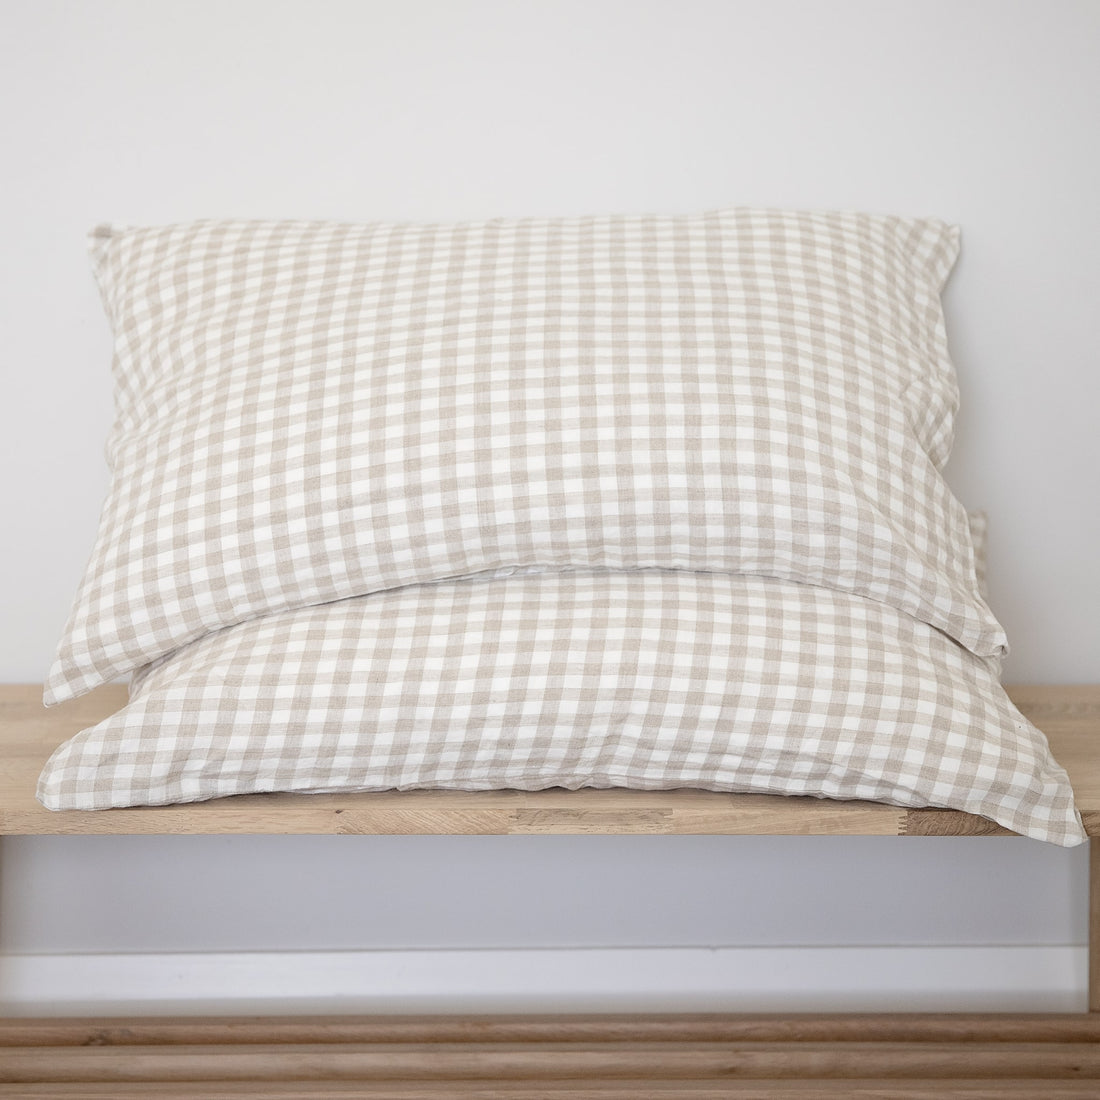 Natural Gingham Linen Pillowcases - Pair